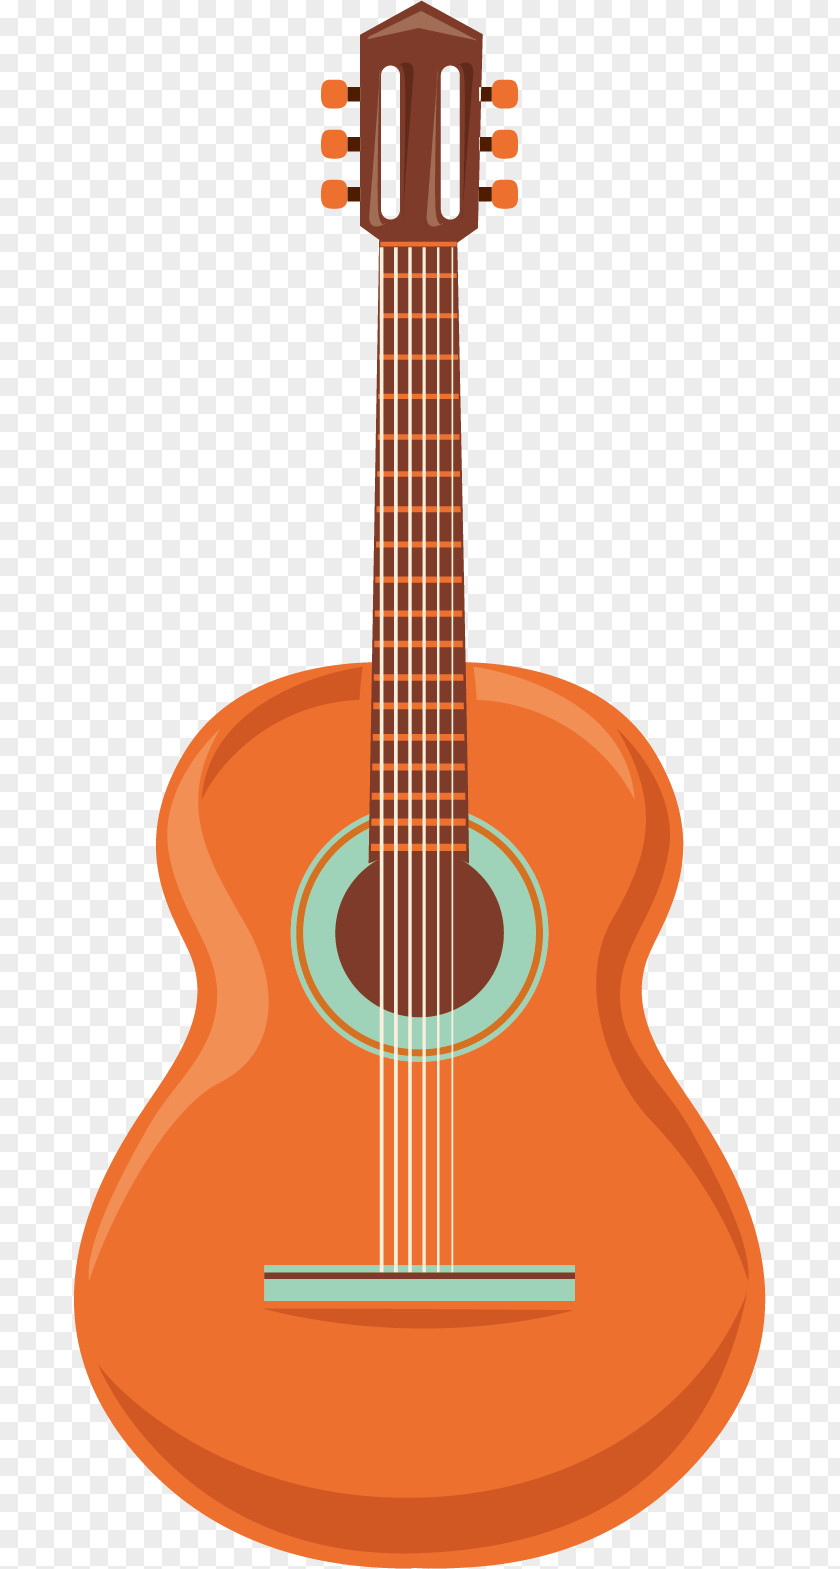 Cartoon Instrument Guitar Tiple Ukulele Acoustic PNG